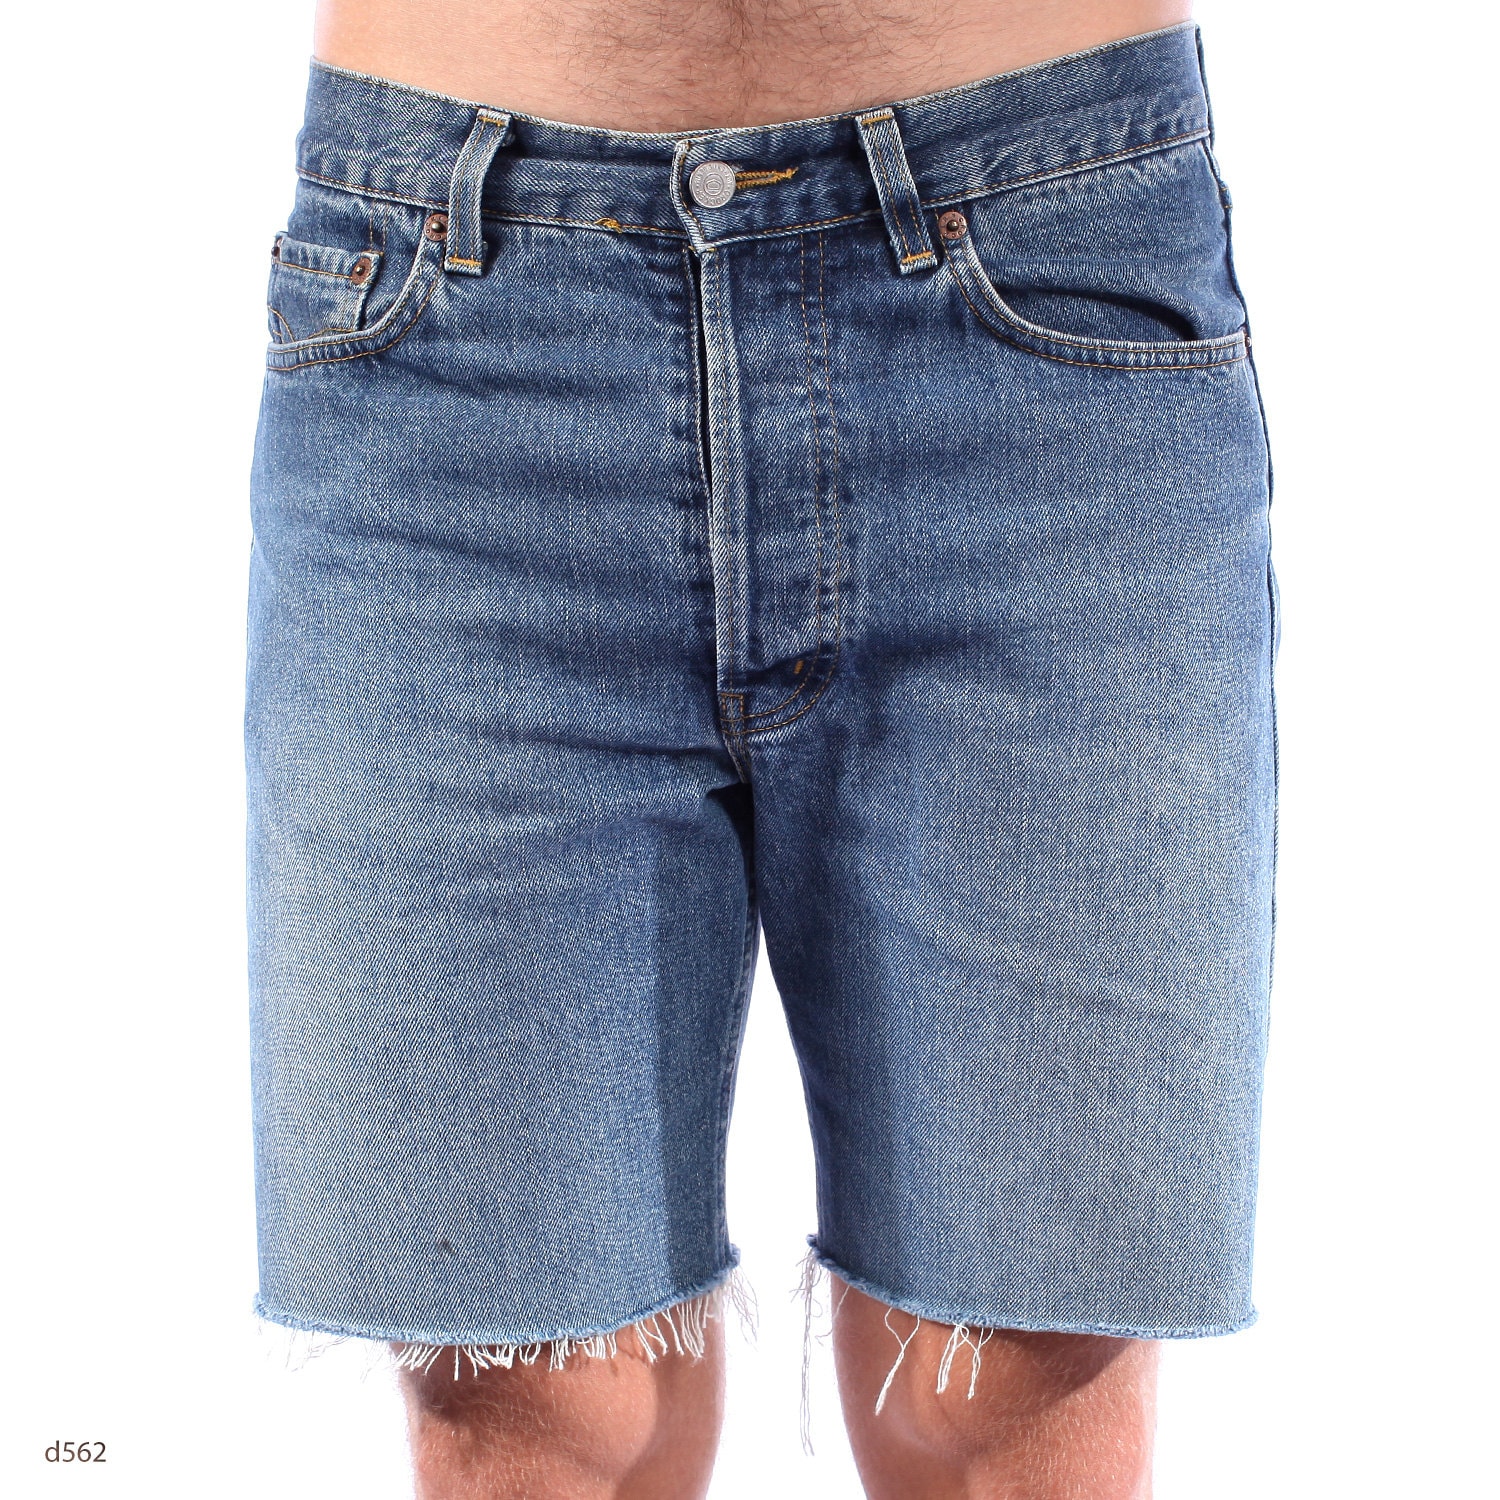 Men Shorts / 80s Denim Shorts for Men / Medium / W33